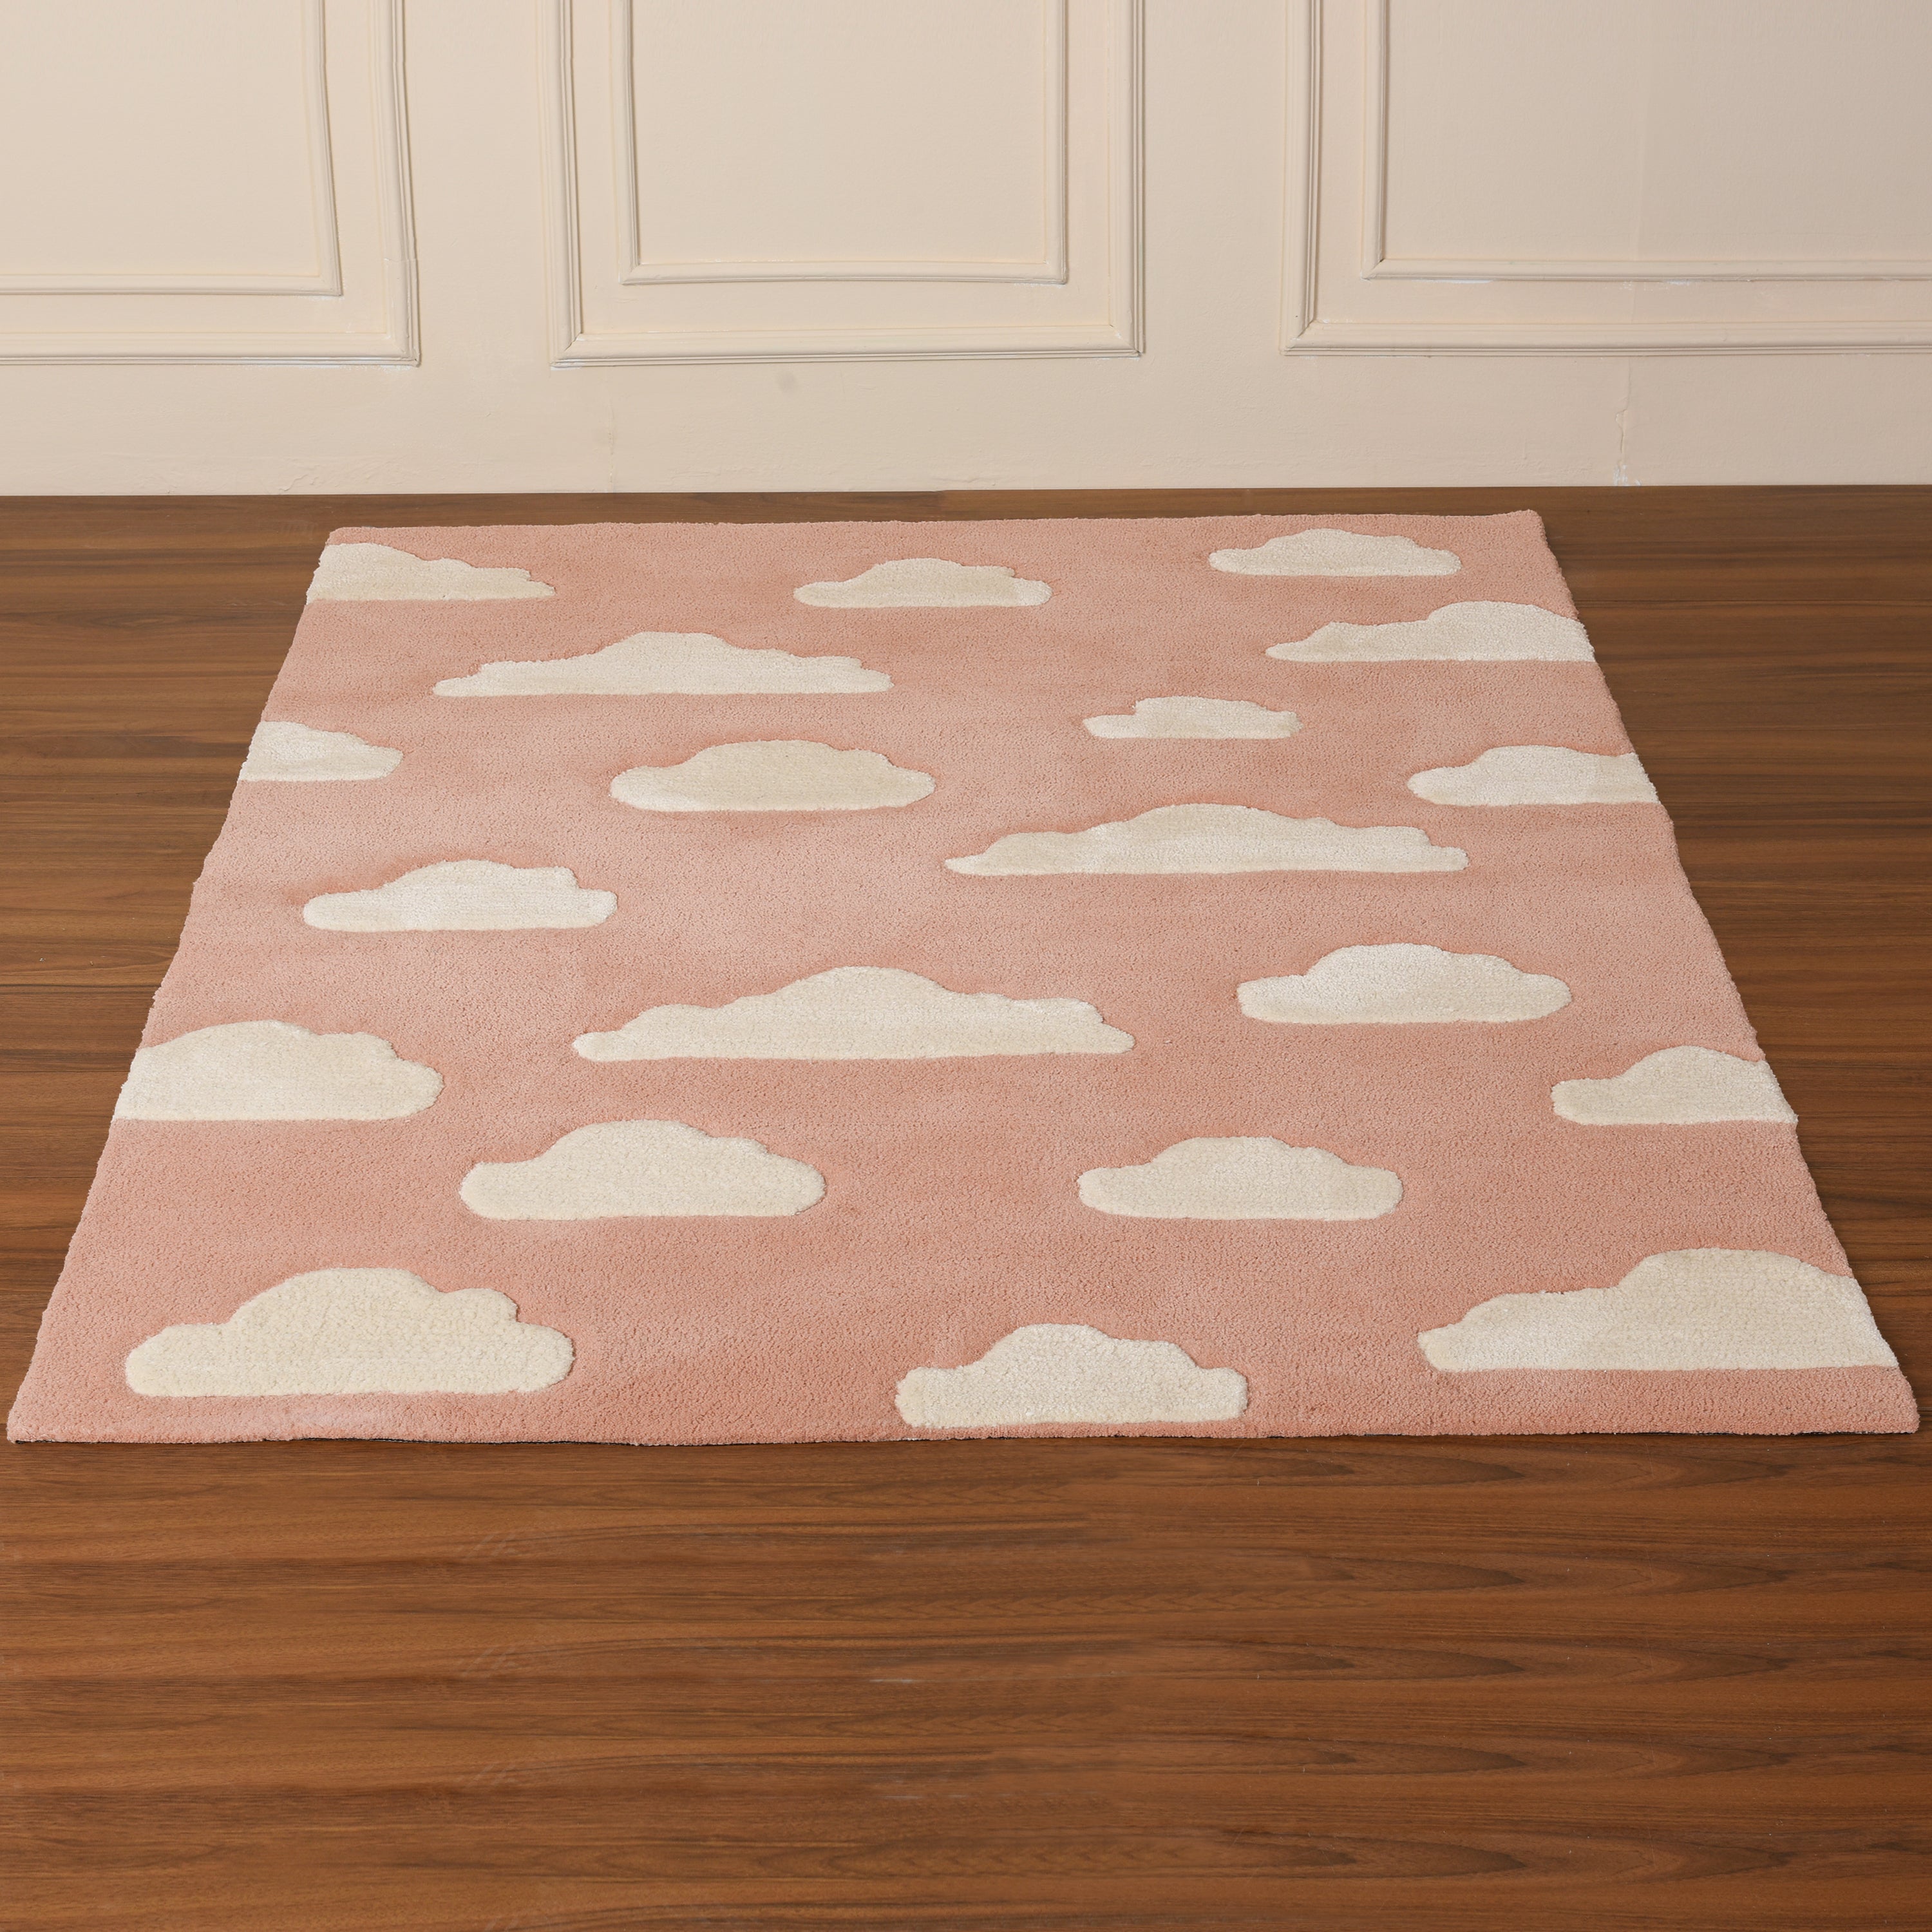 Pink Clouds kids carpet